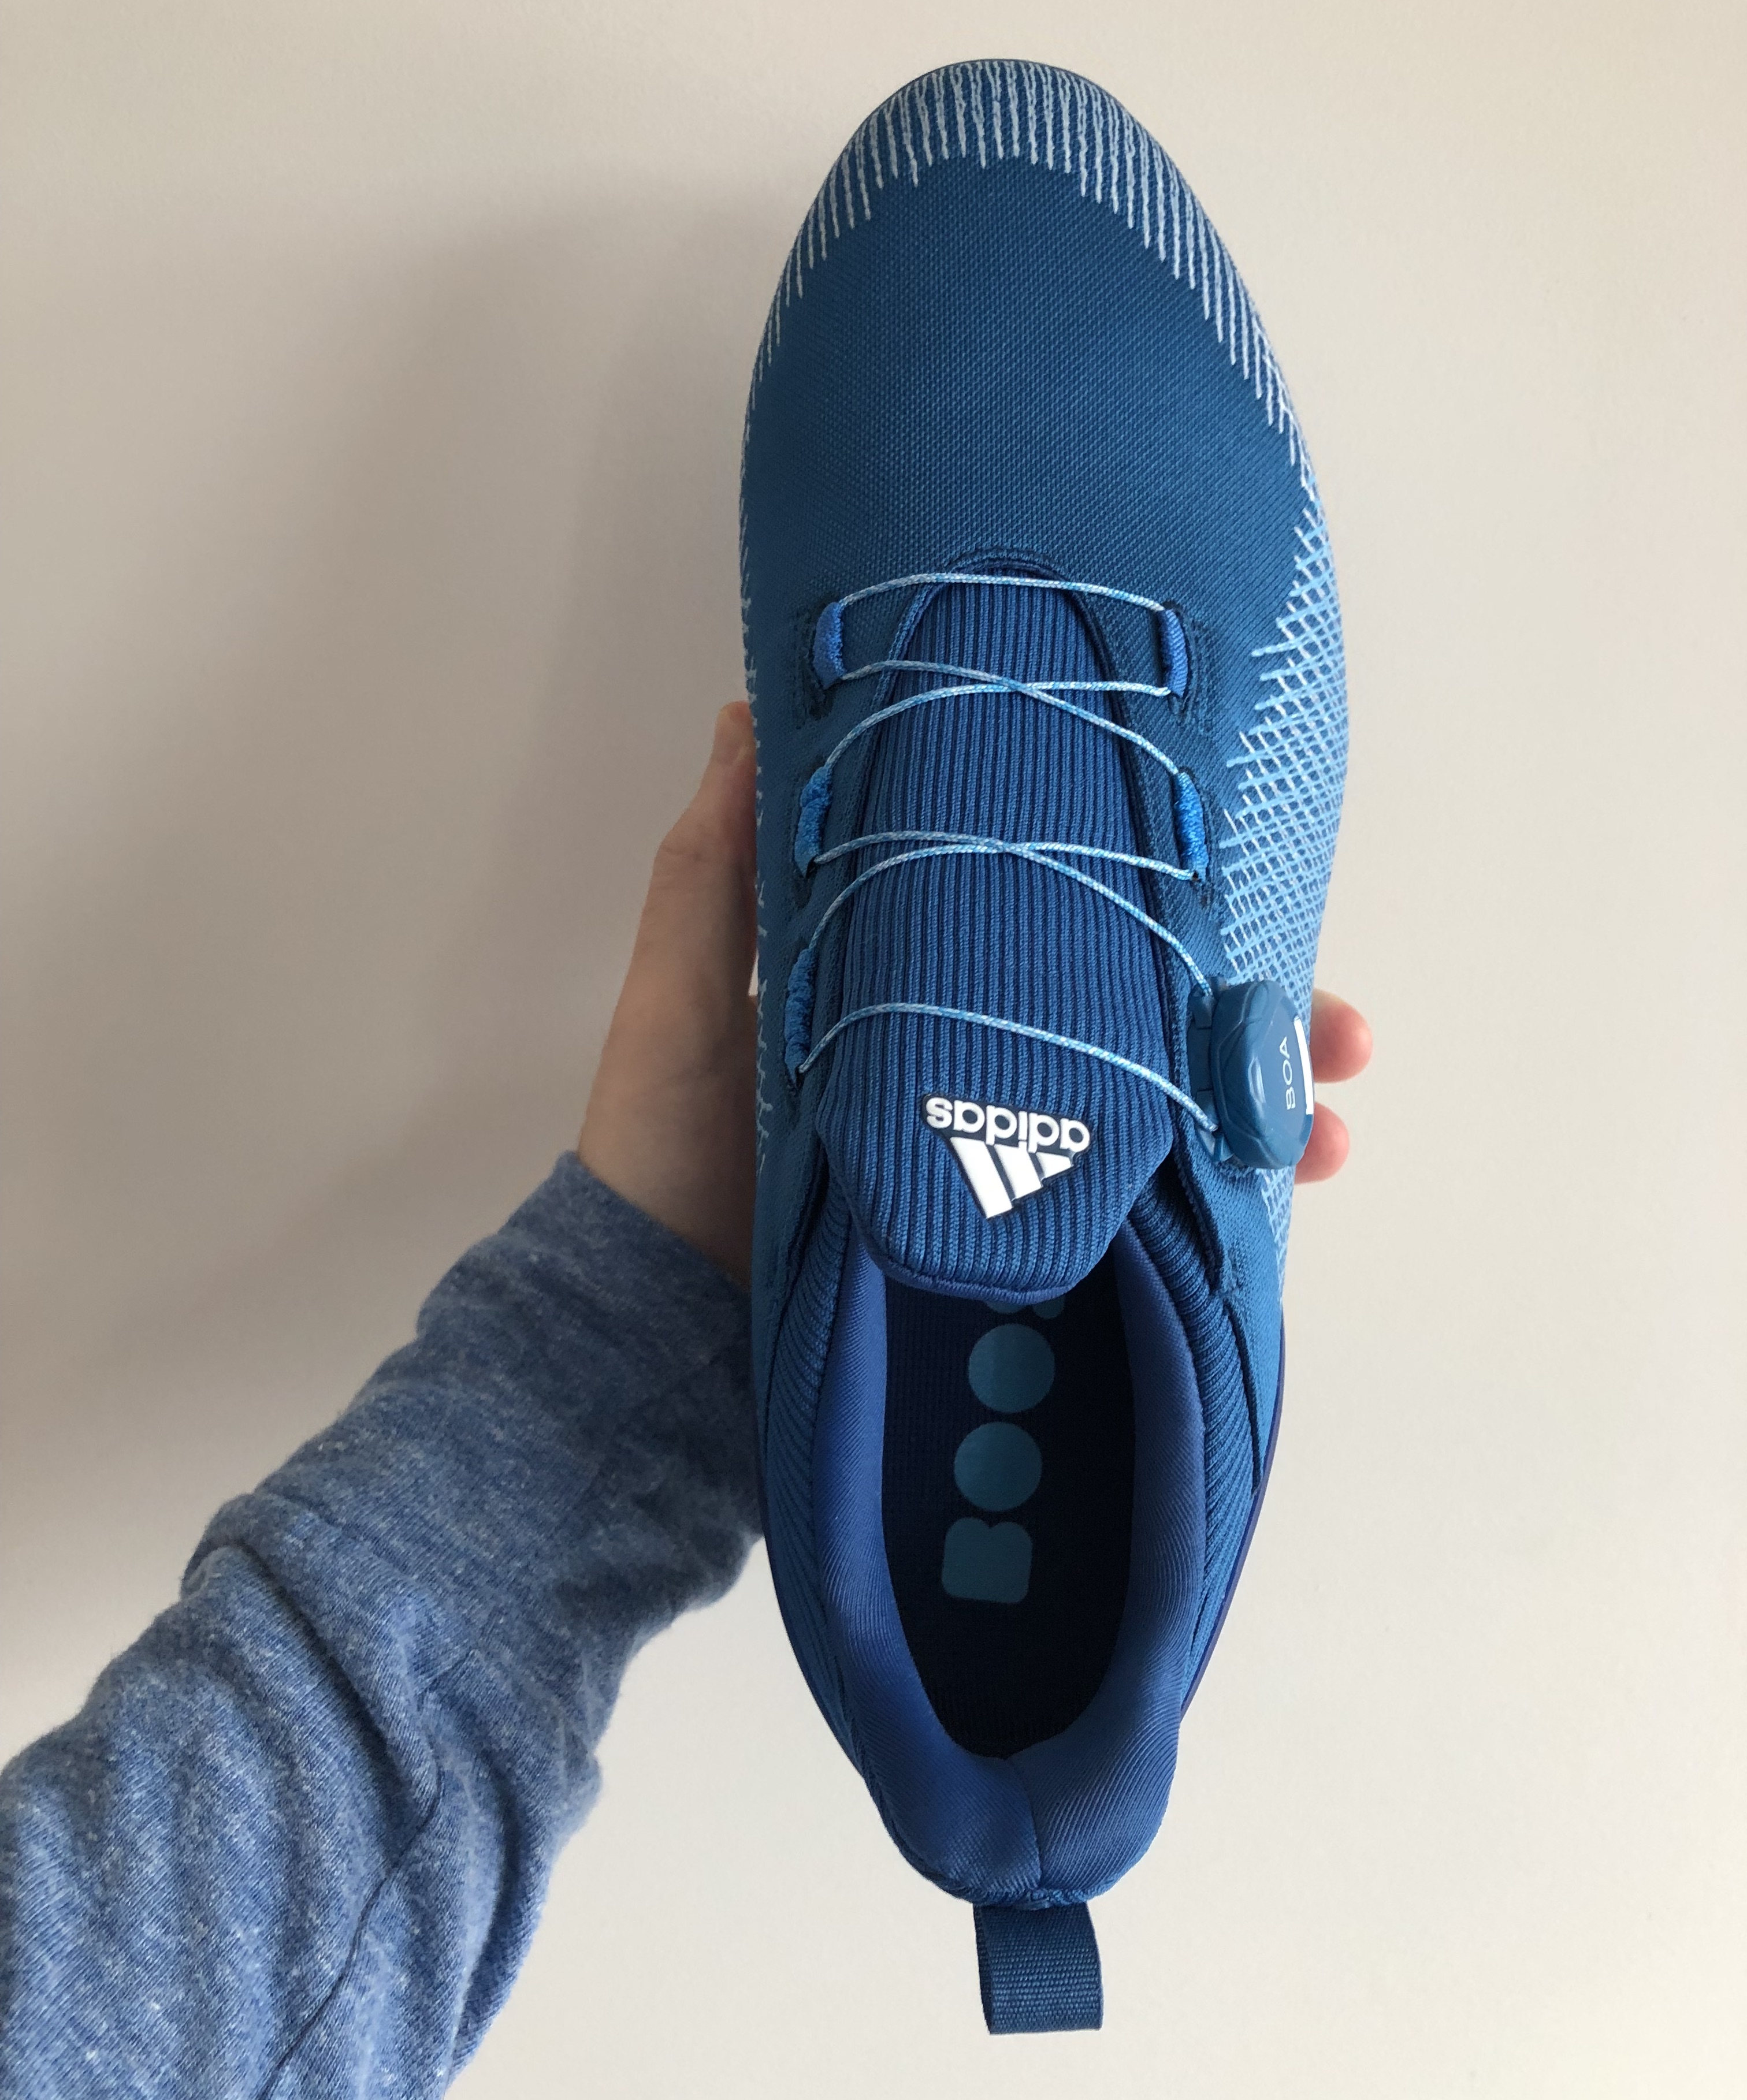 adidas forgefiber boa golf shoes review